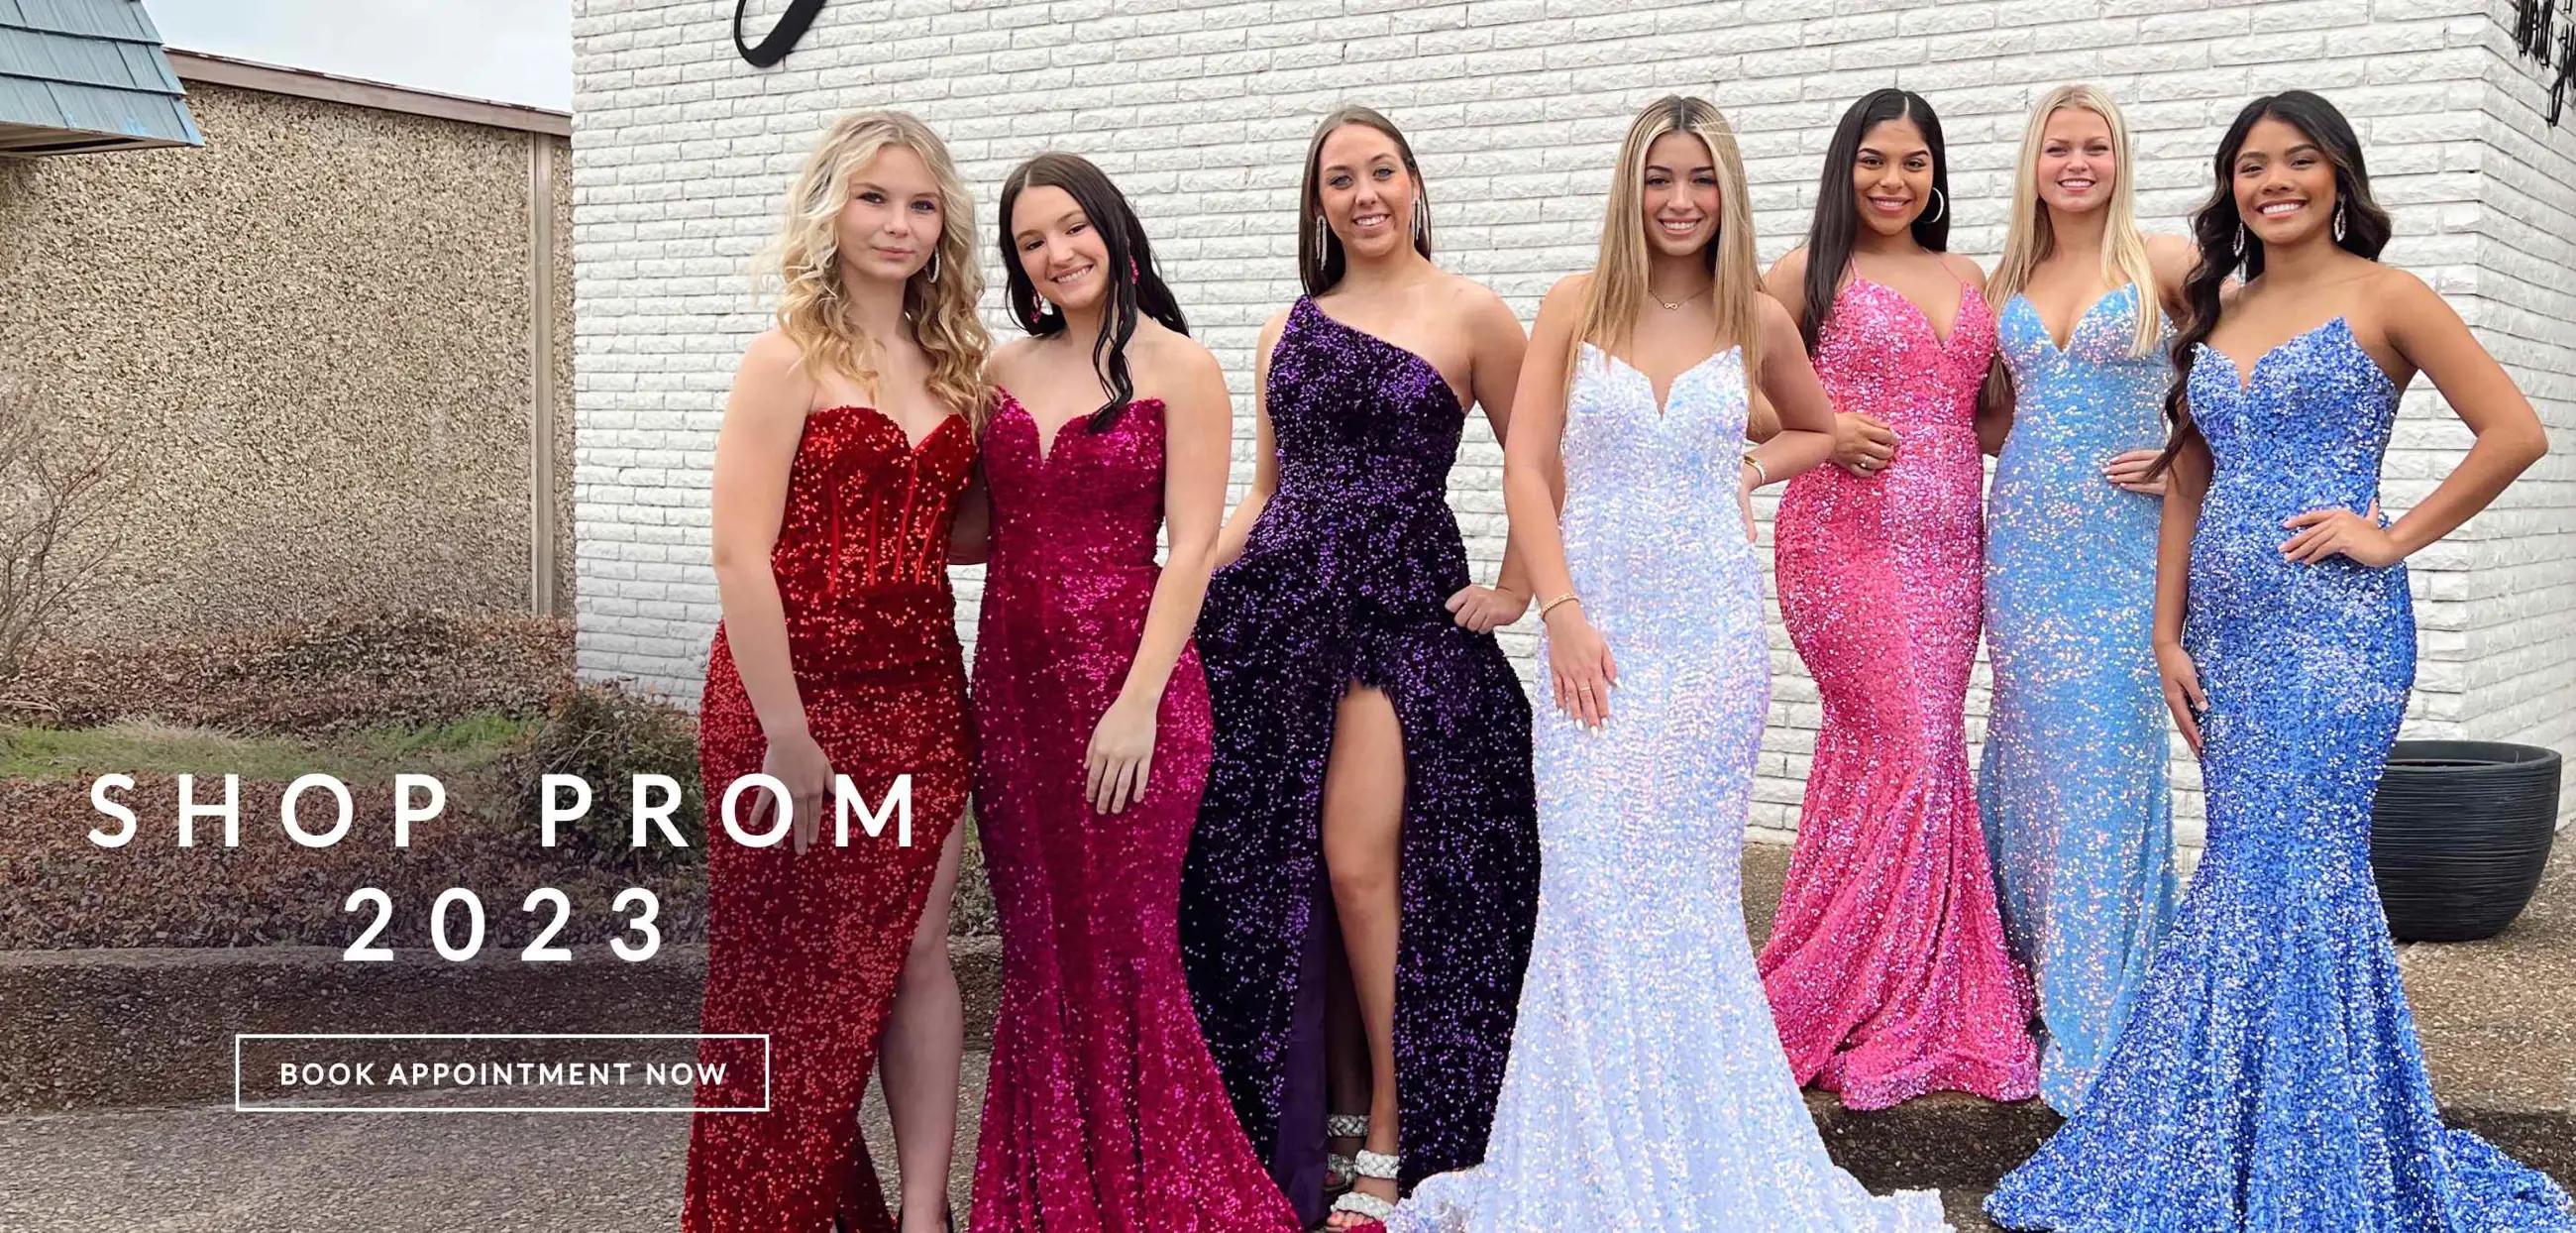 Girls Wearing Prom Dresses